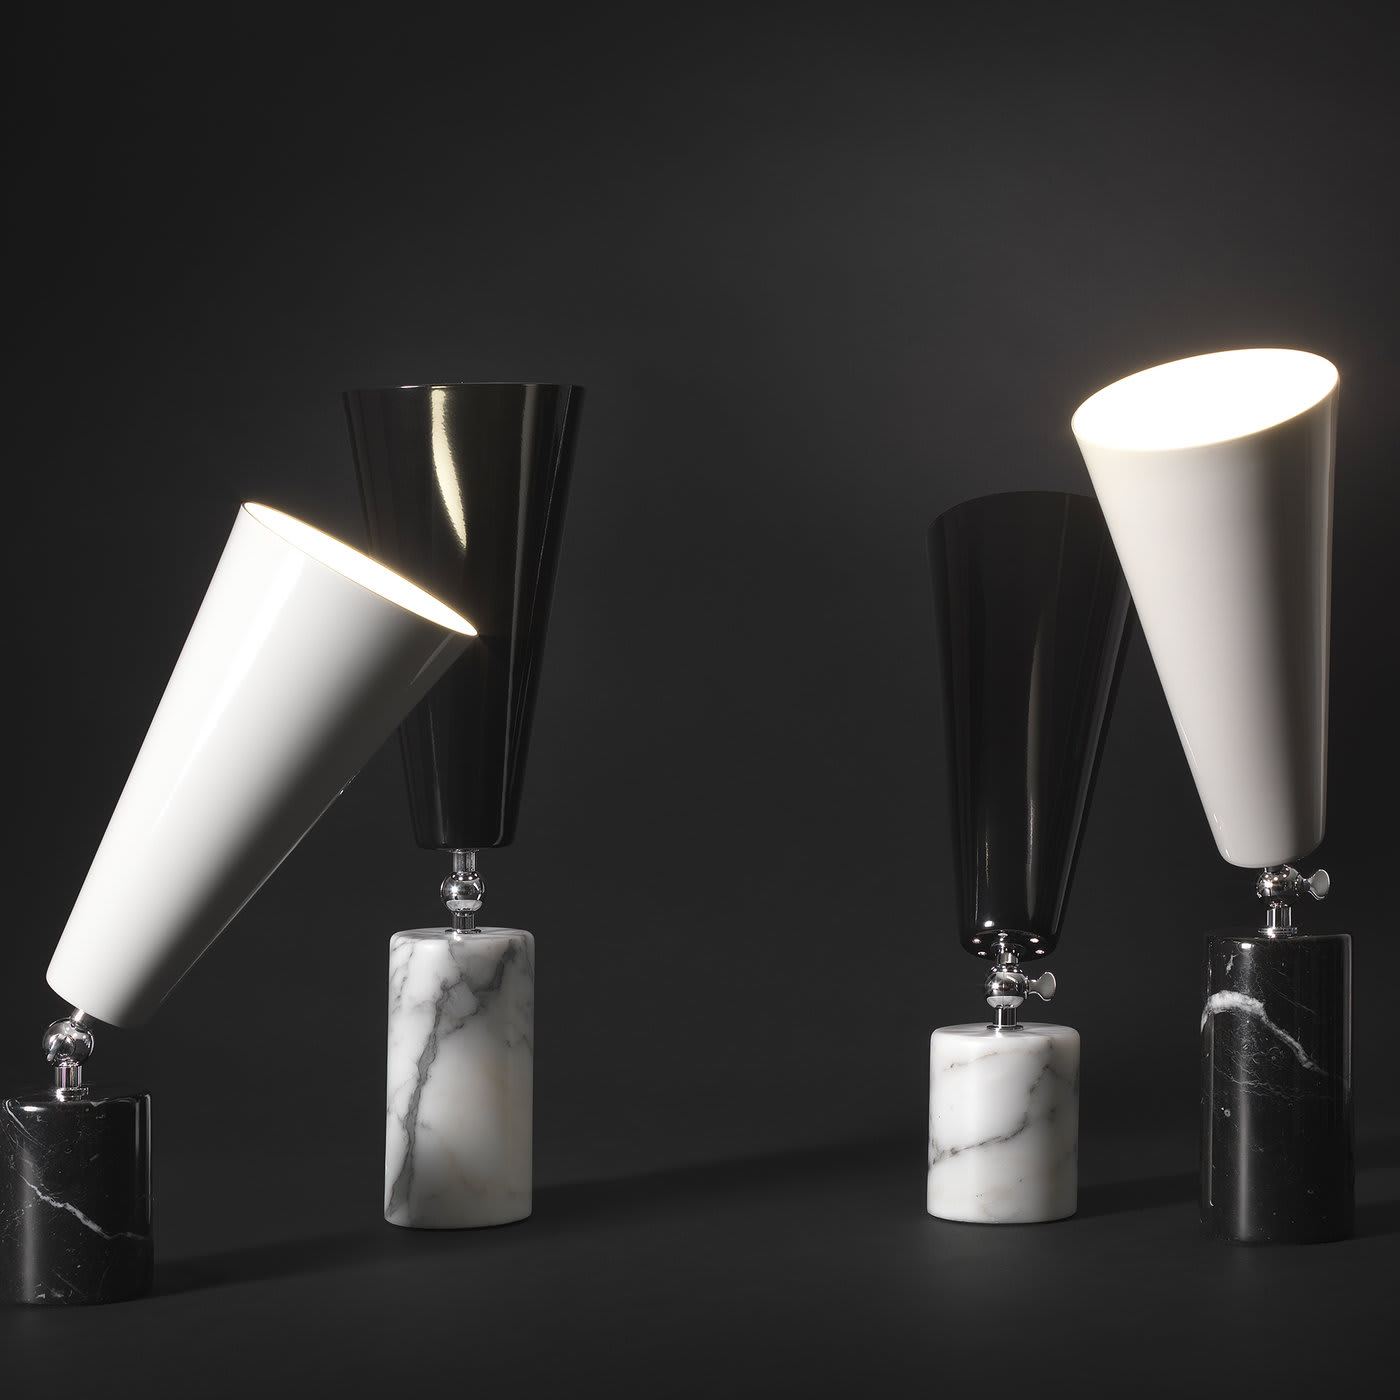 Vox Bassa Table Lamp by Lorenza Bozzoli in Carrara Marble - Tato